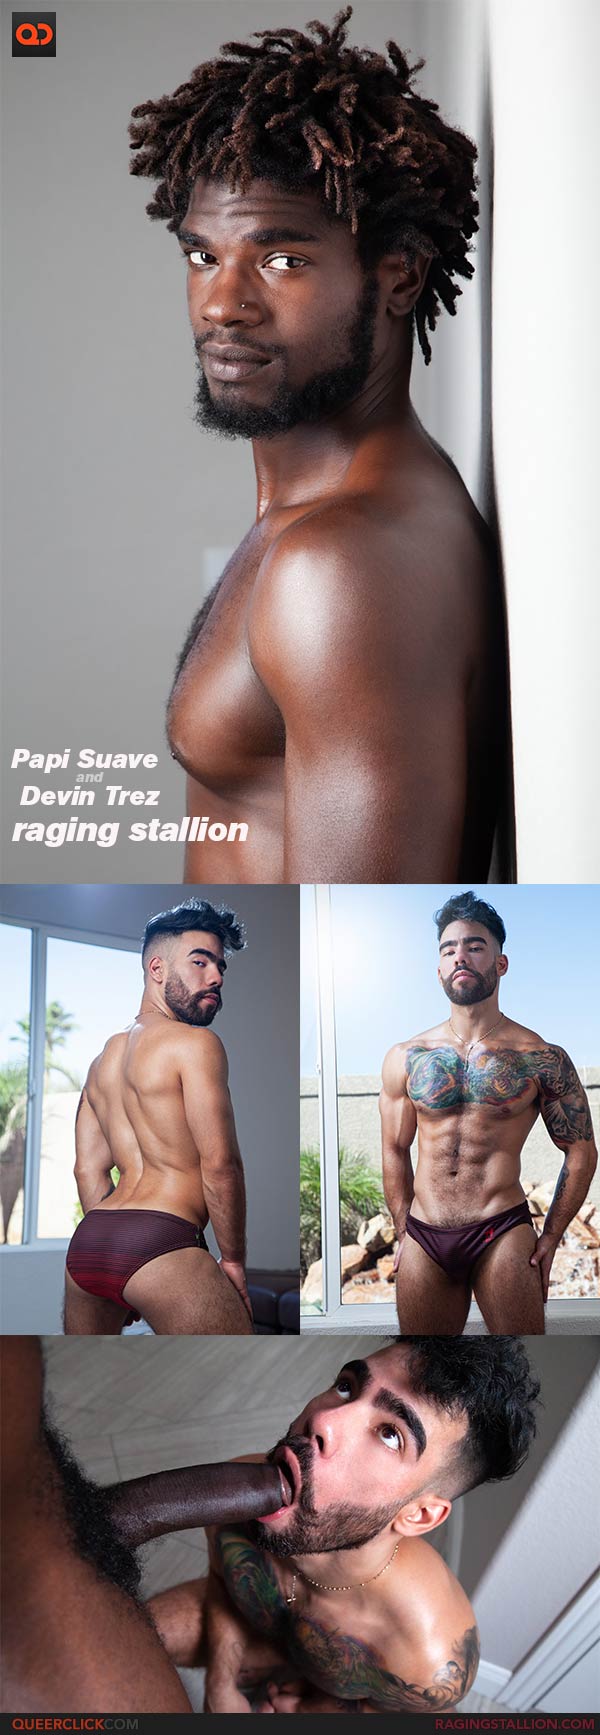 RagingStallion: Papi Suave and Devin Trez